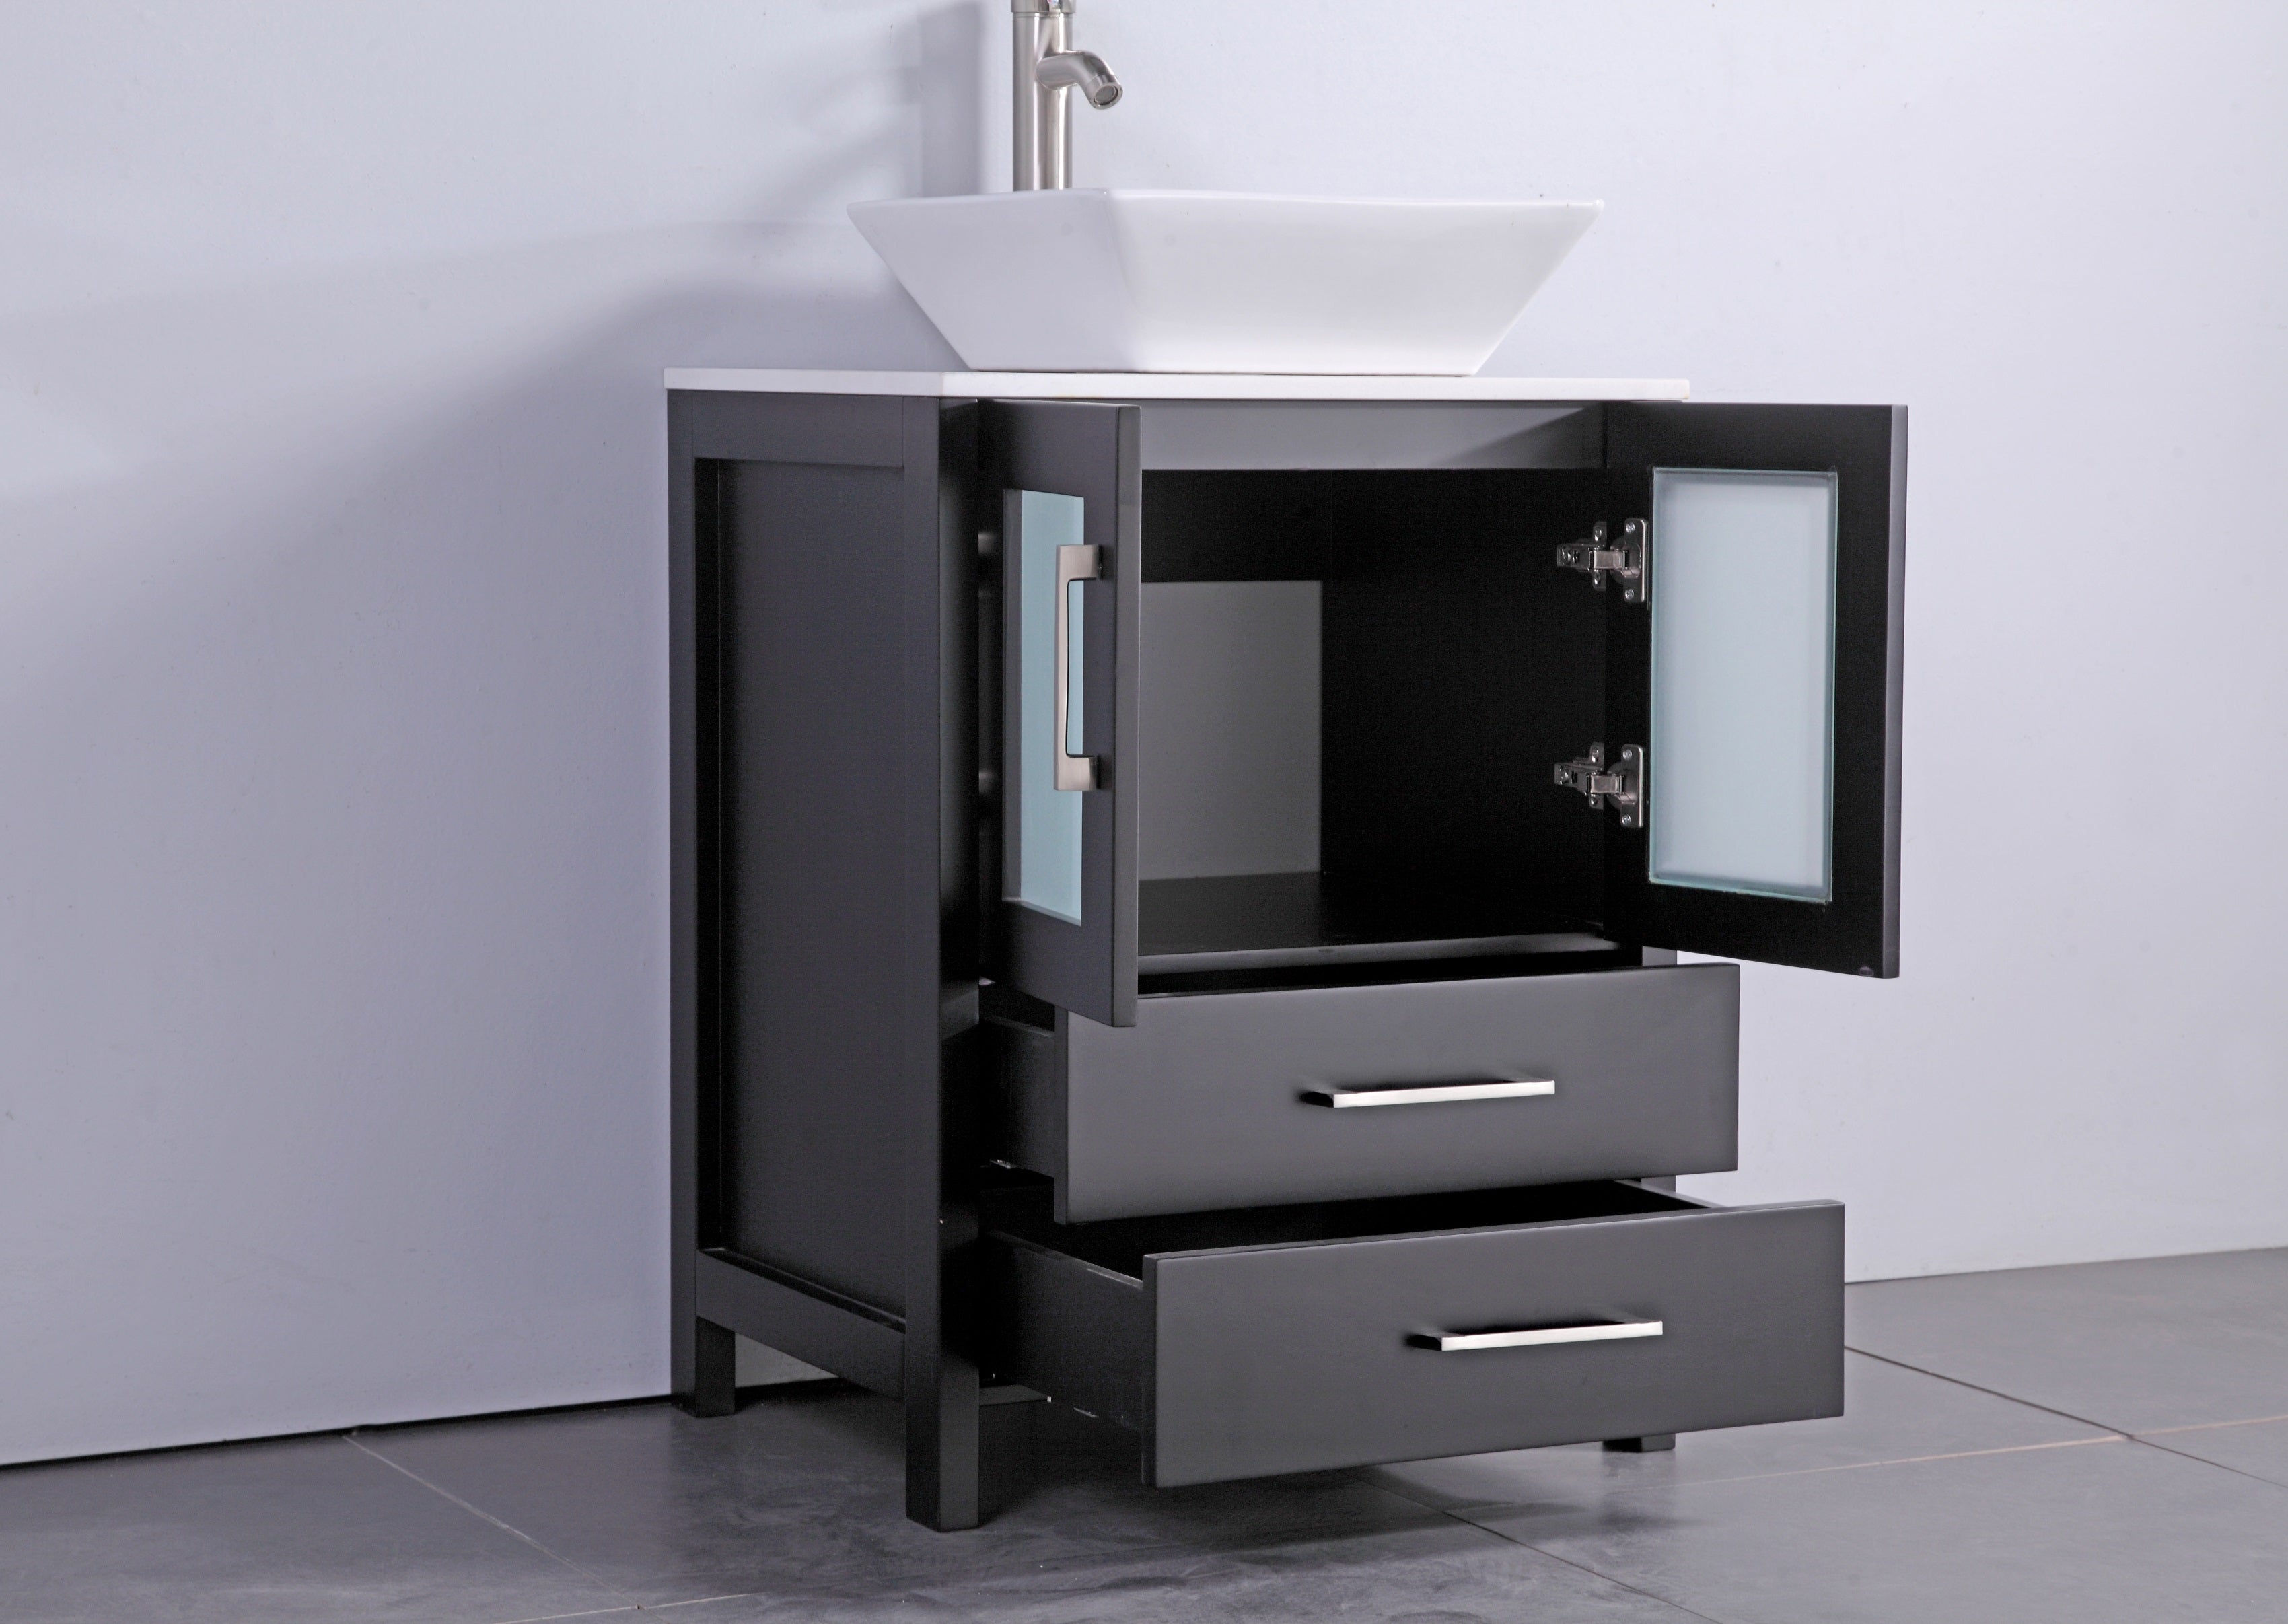 Vanity Art - Monaco 72" Double Vessel Sink Bathroom Vanity Set with Sinks and Mirrors - 2 Side Cabinets - Bhdepot 